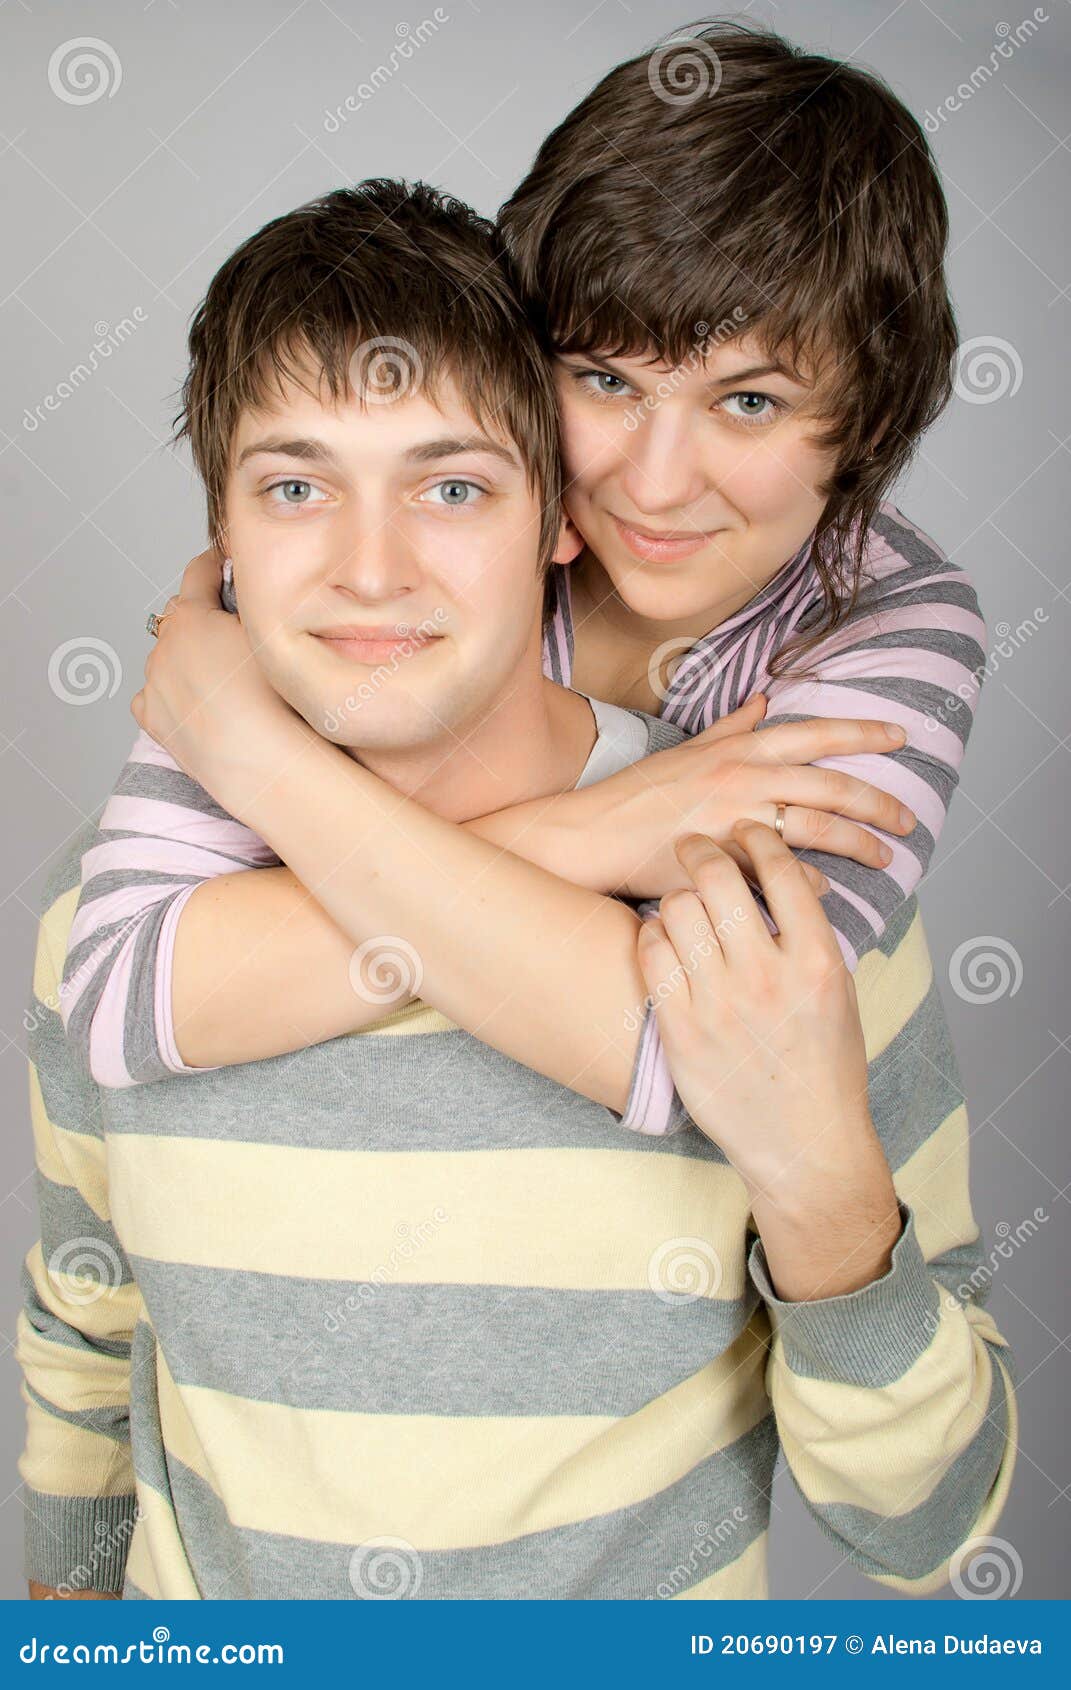 https://thumbs.dreamstime.com/z/happy-couple-hugging-20690197.jpg